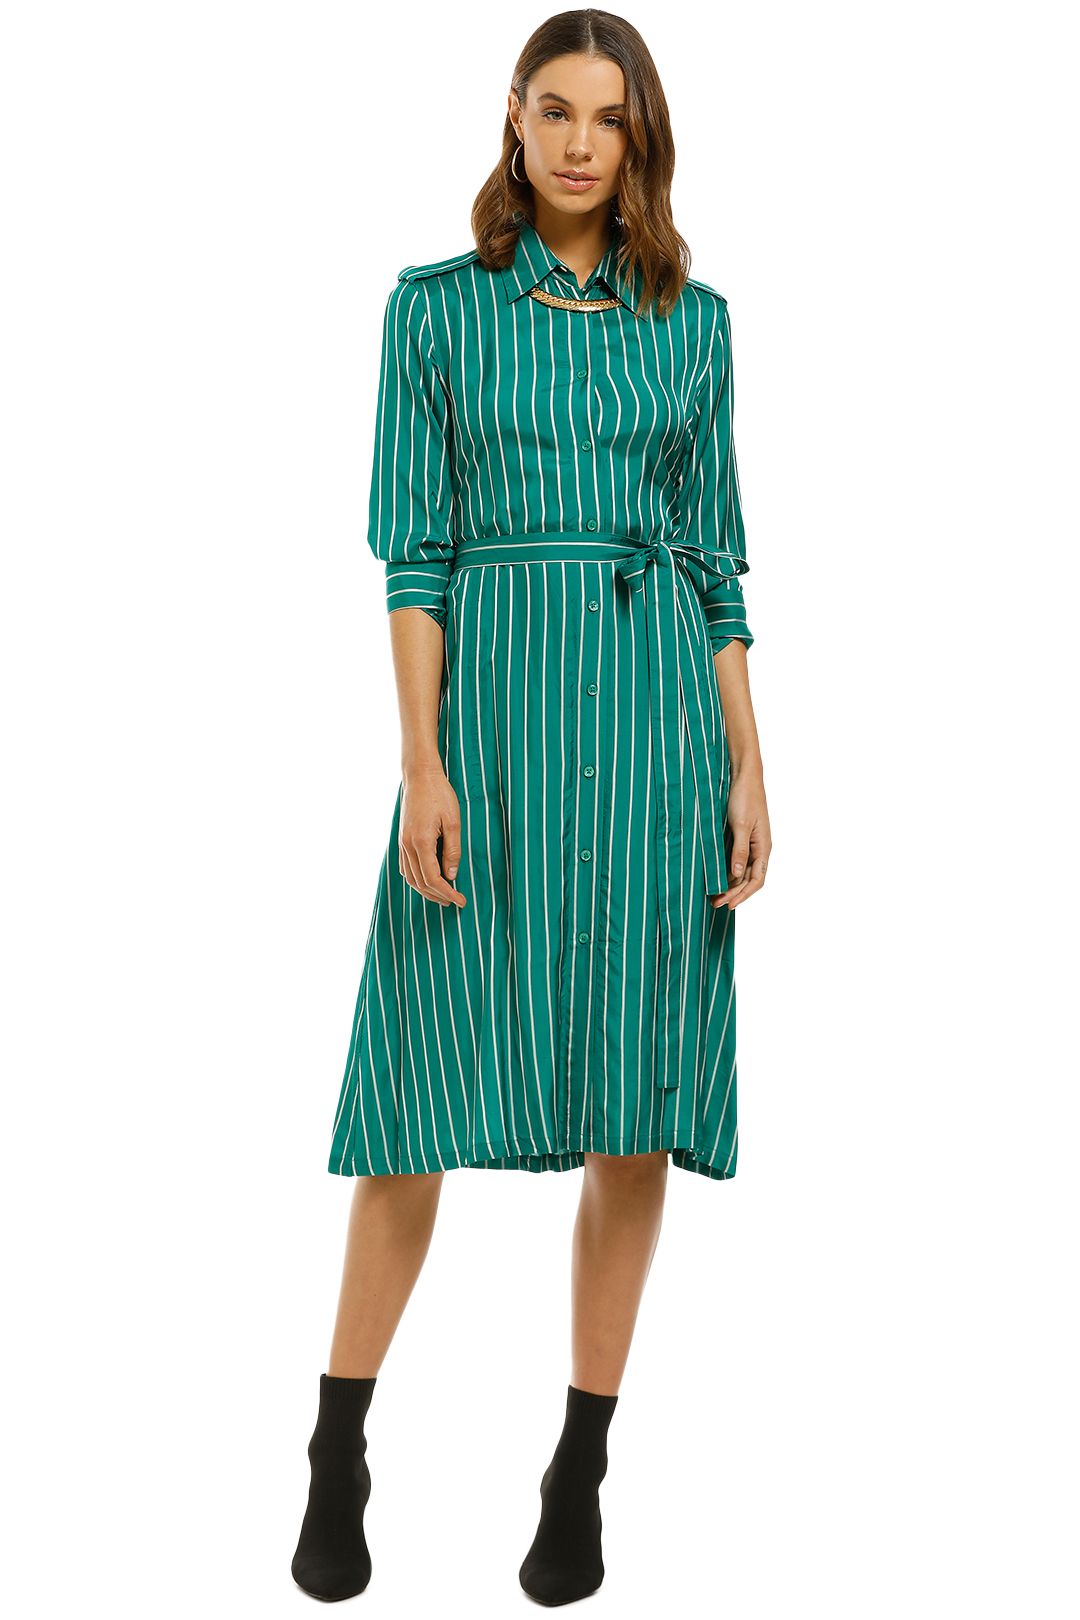 Scanlan Theodore - Stripe Shirt Dress - Emerald - Front